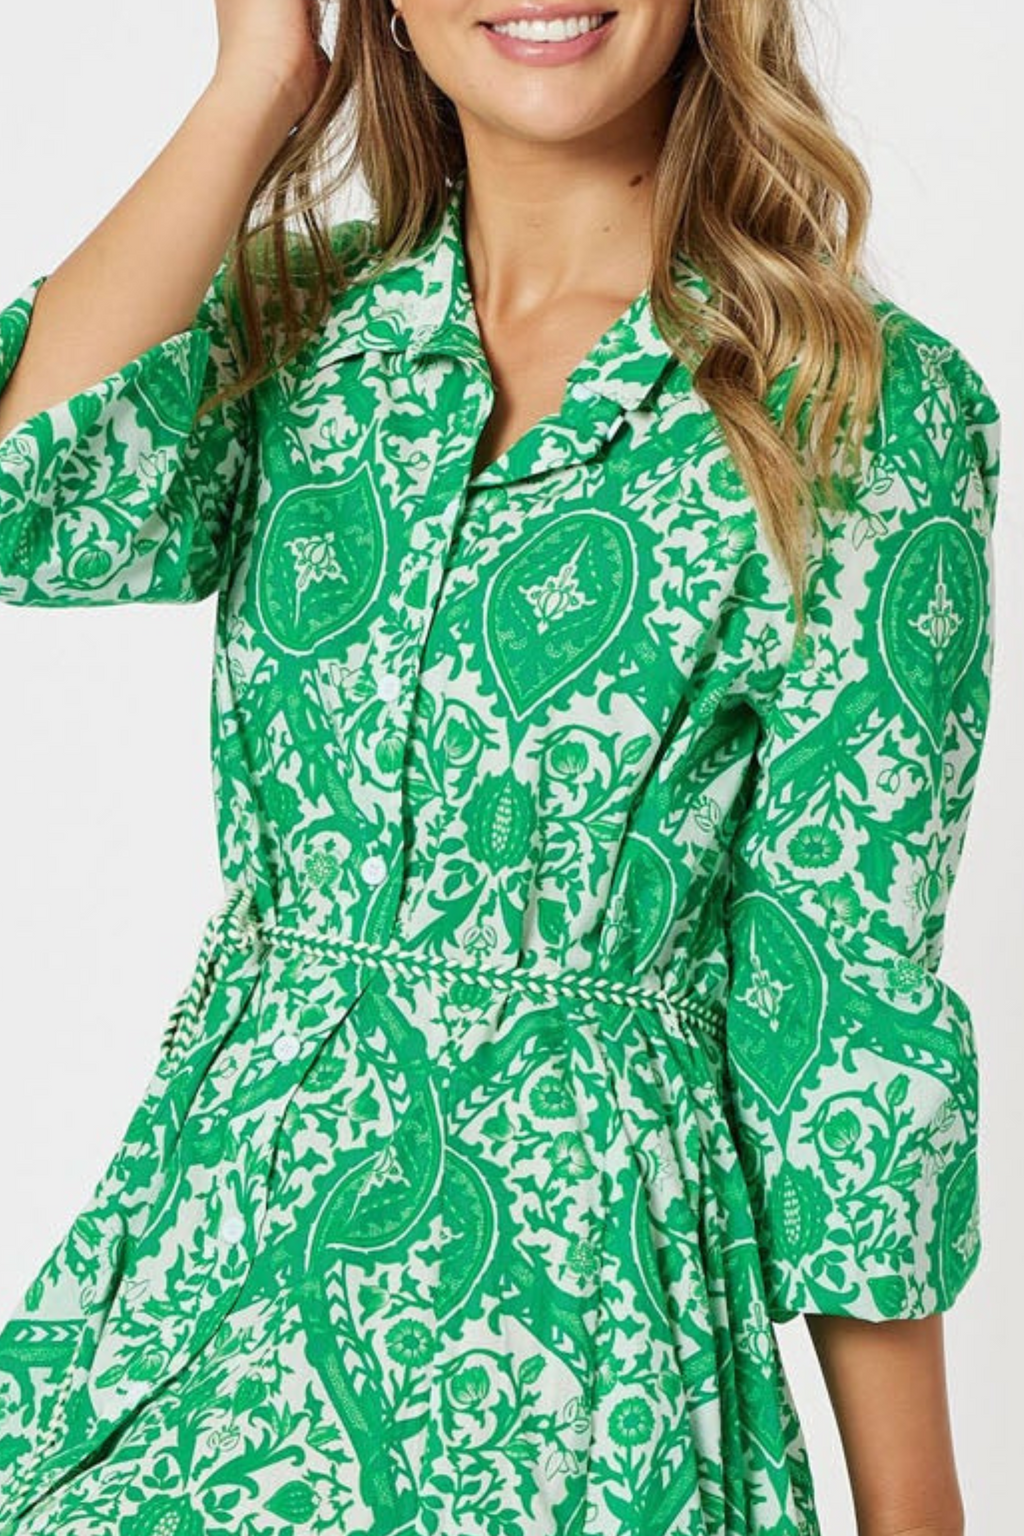 HOLA DRESS - Green Print